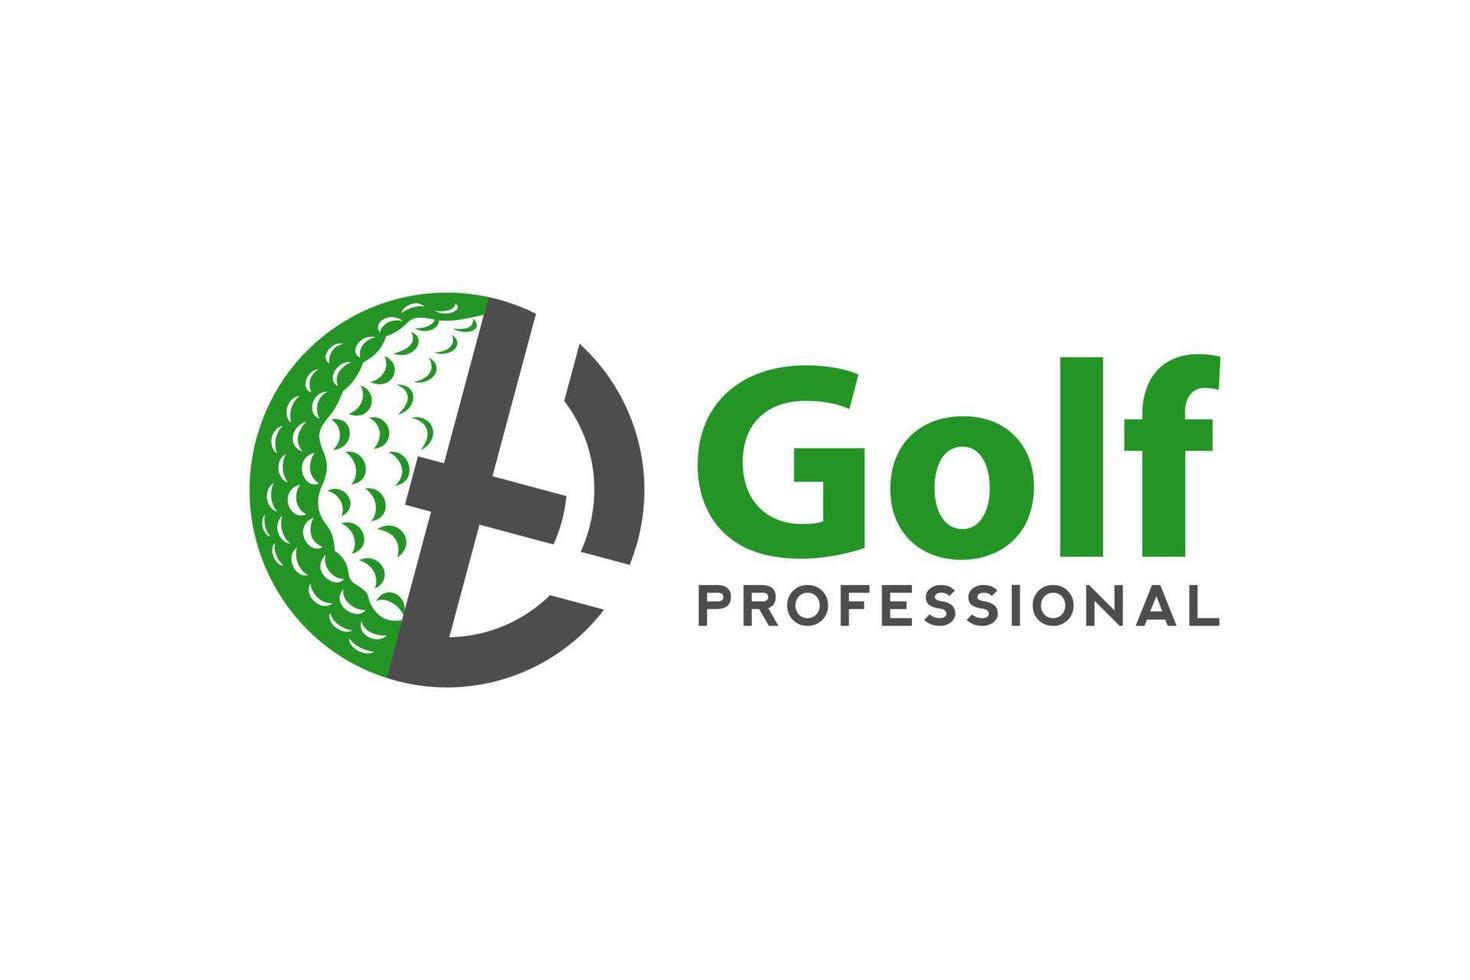 Letter T for Golf logo design vector template, Vector label of golf, Logo of golf championship, illustration, Creative icon, design concept